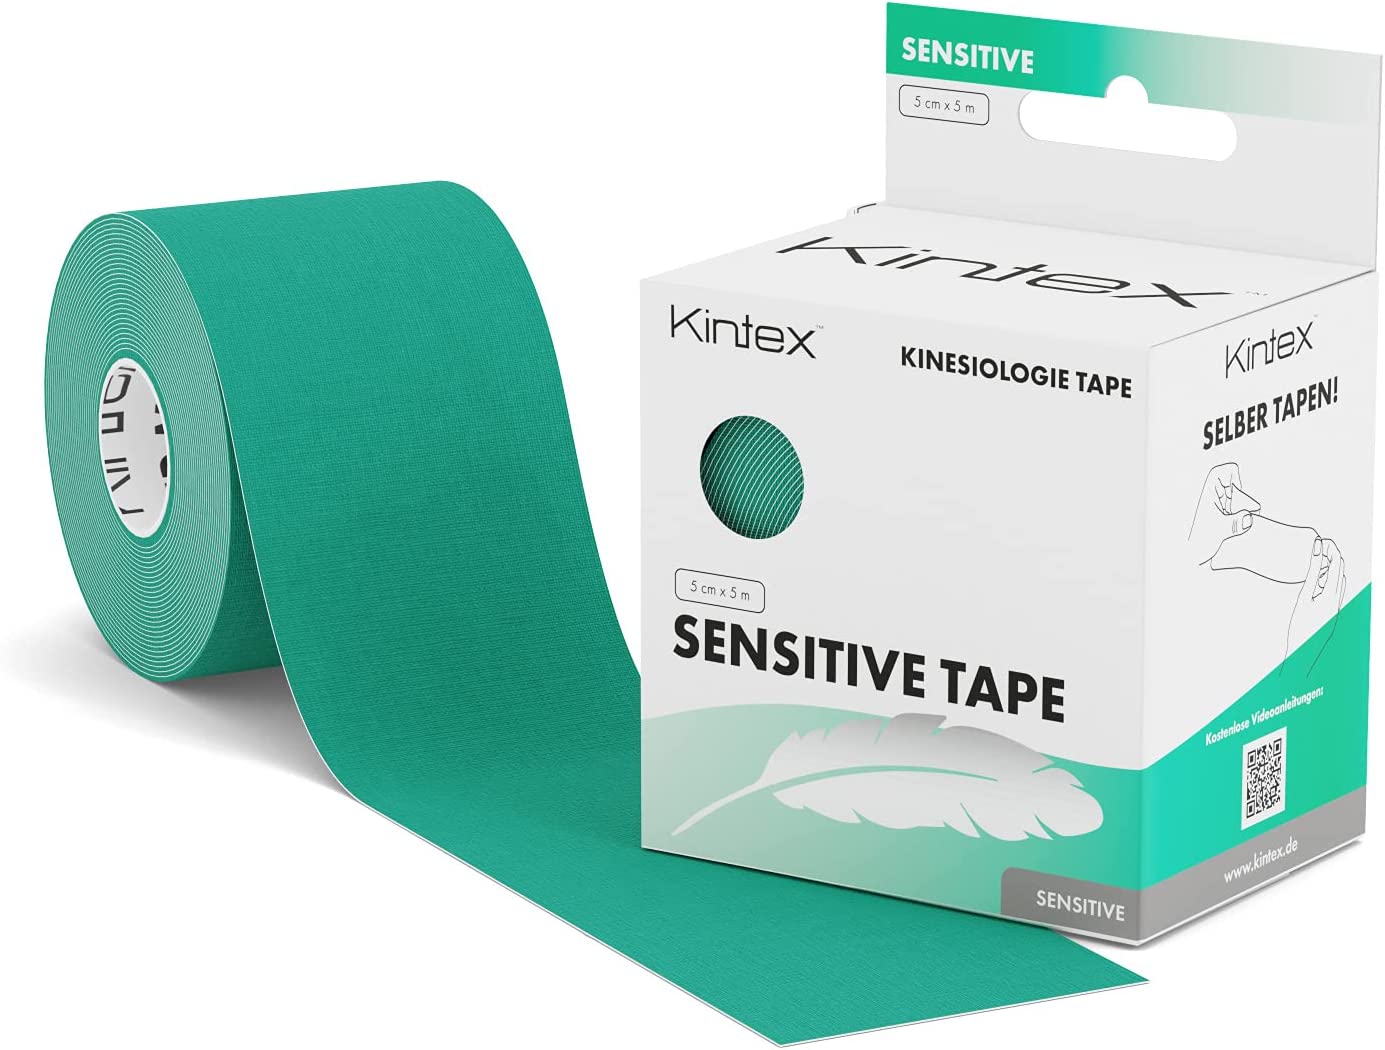 Kintex Kinesiology Tape Sensitive Physio Tape - Mint Green 5 Metres